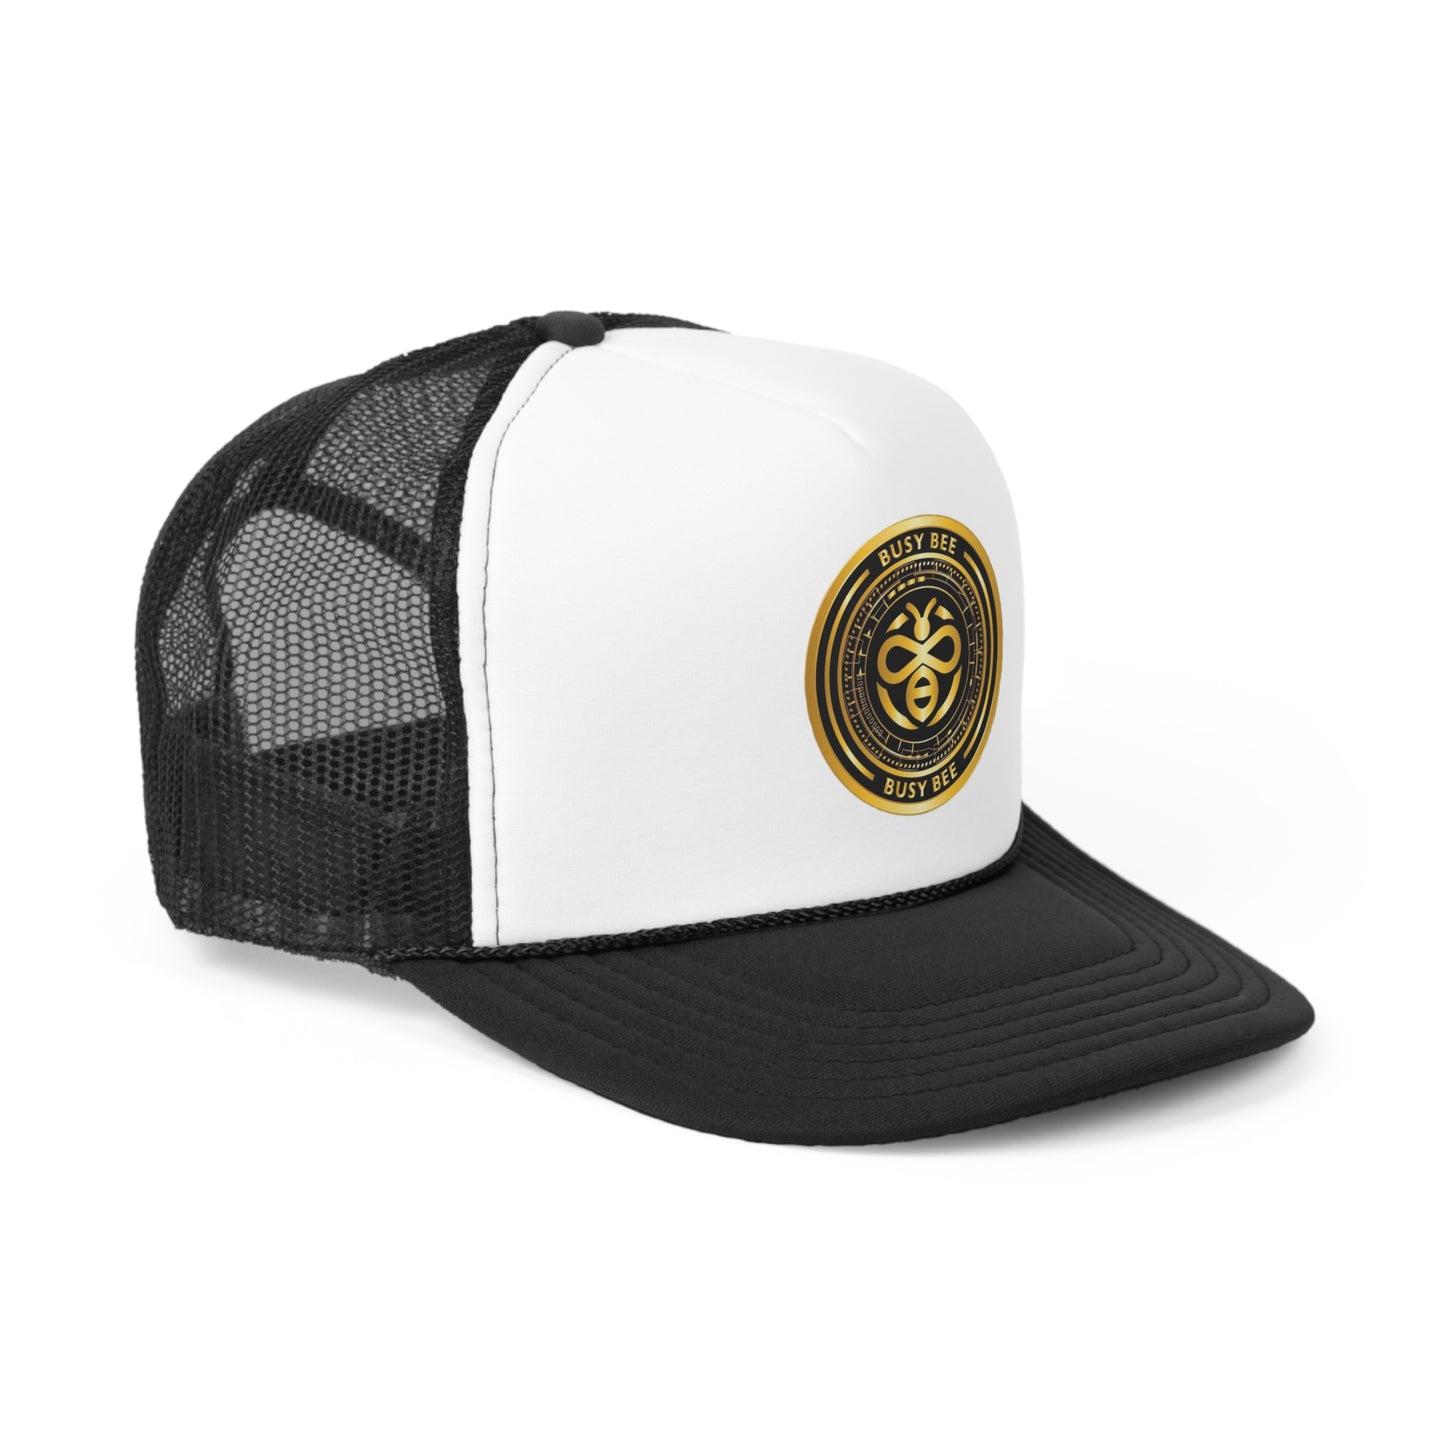 Busy Bee - Black/Gold Logo Trucker Caps